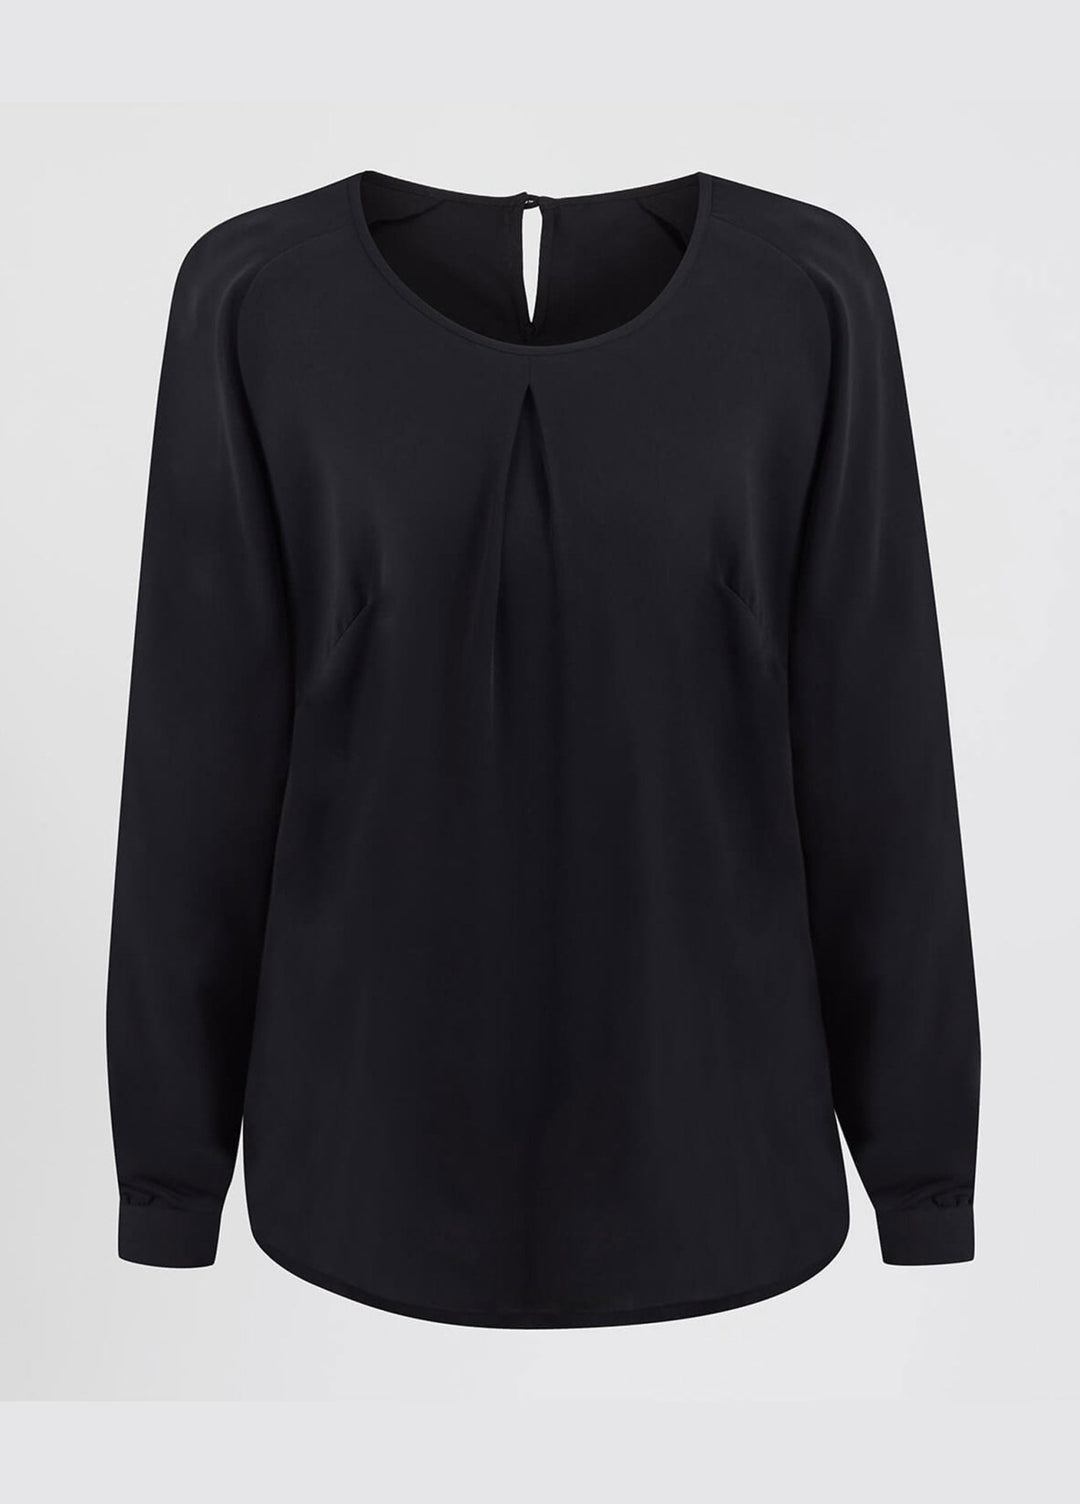 Mona Round Neck Blouse Long Sleeve - The Work Uniform Company